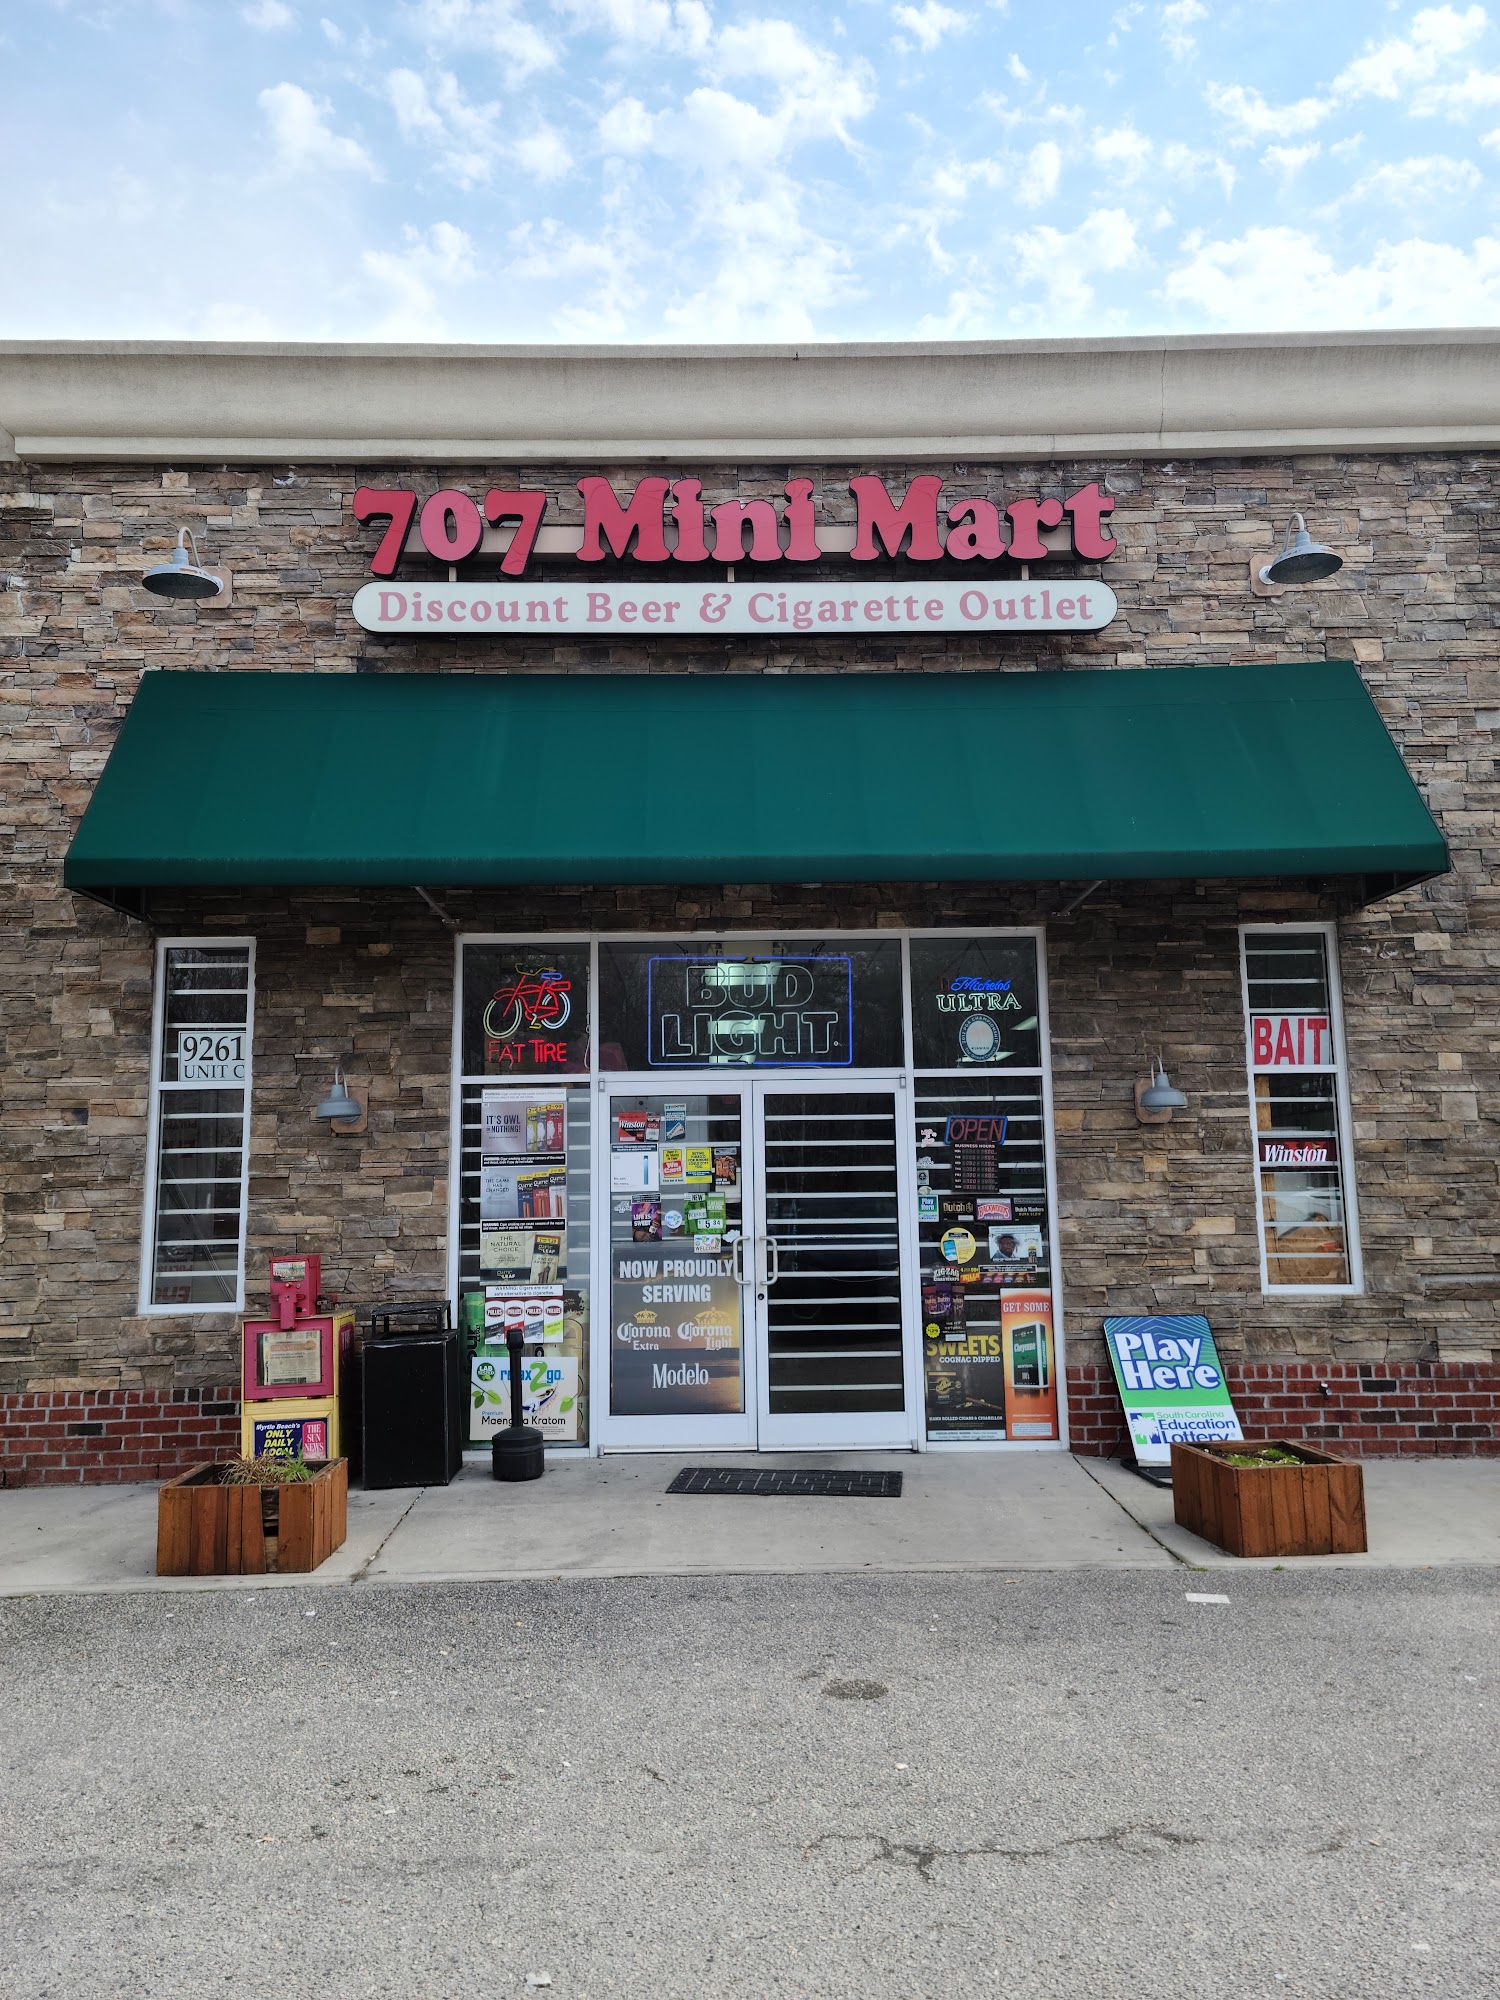 707 MINI MART - Your local Vape and Smoke shop